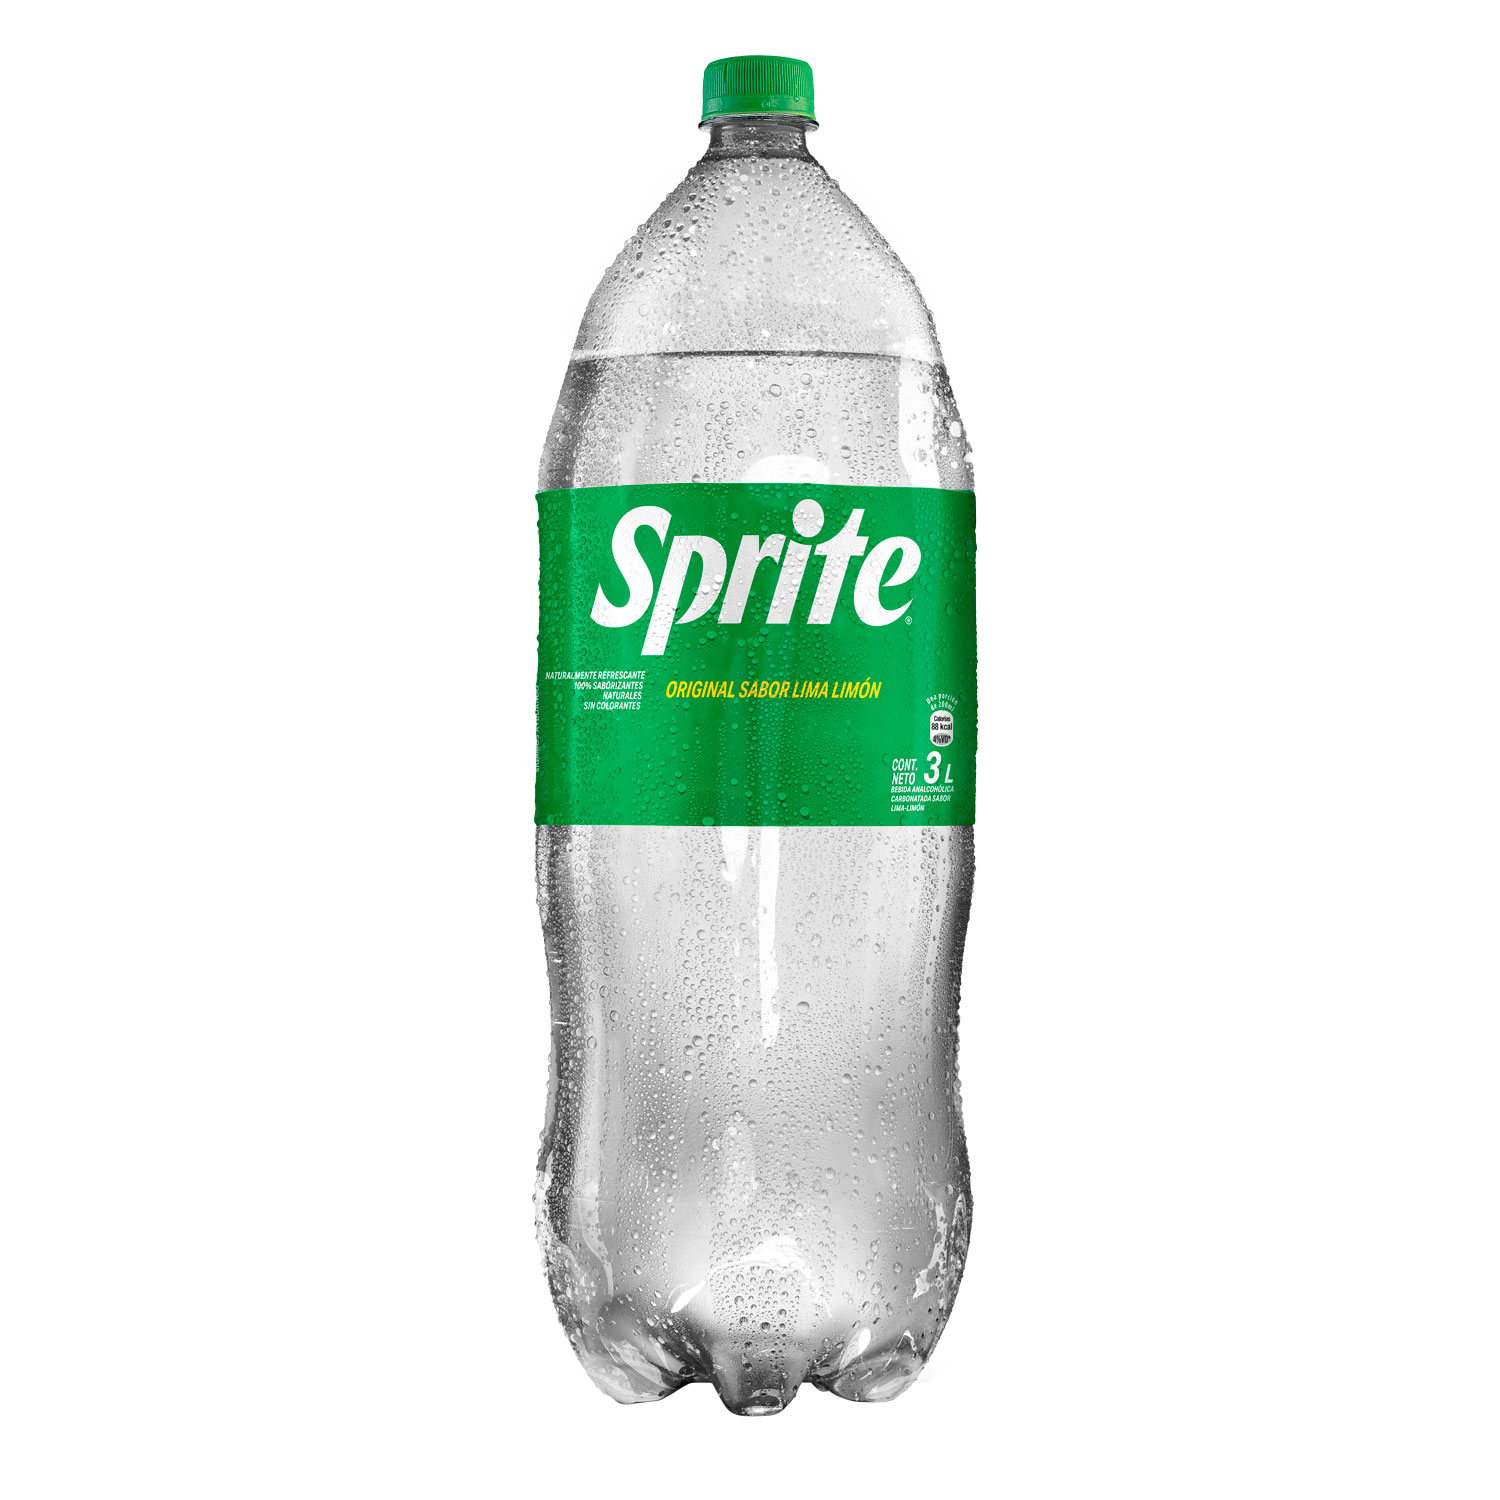 Botella de Sprite Lima Limón 3L